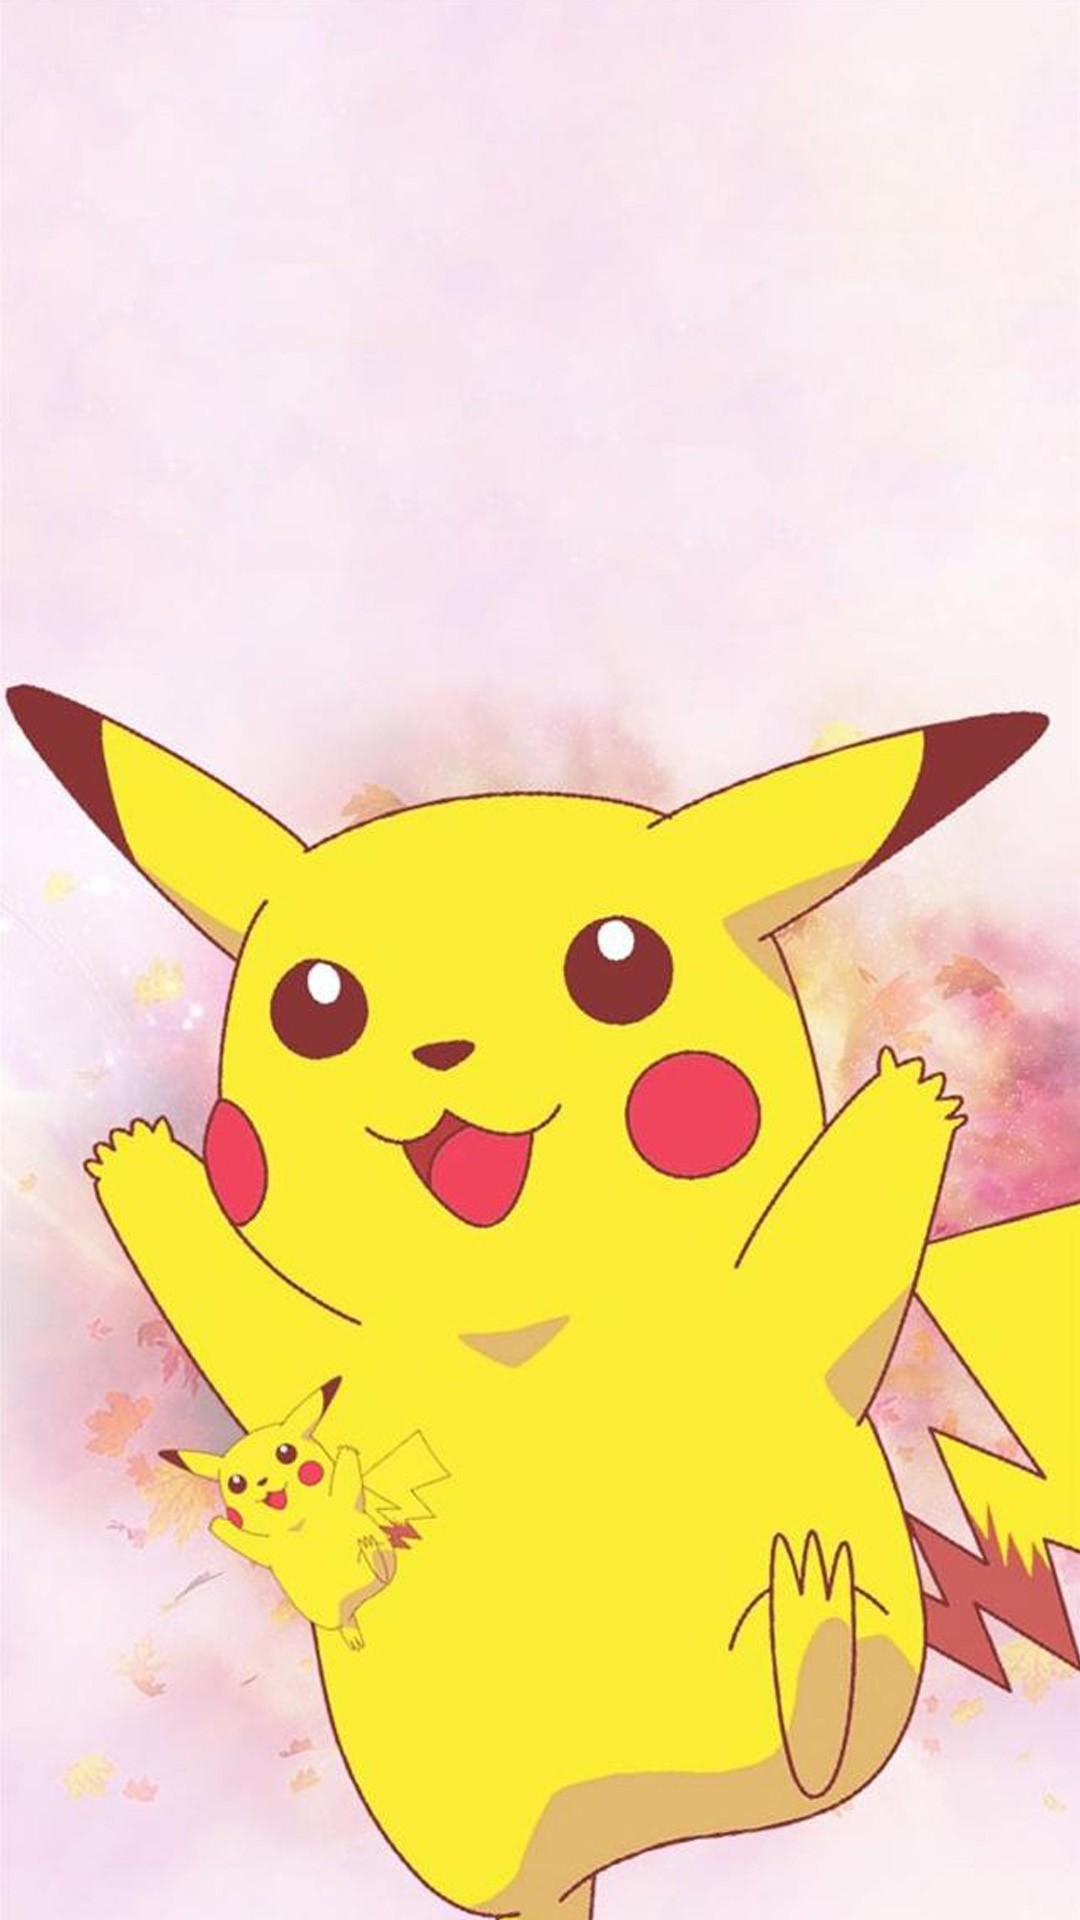 pikachu wallpaper,cartoon,yellow,illustration,animation,animated cartoon